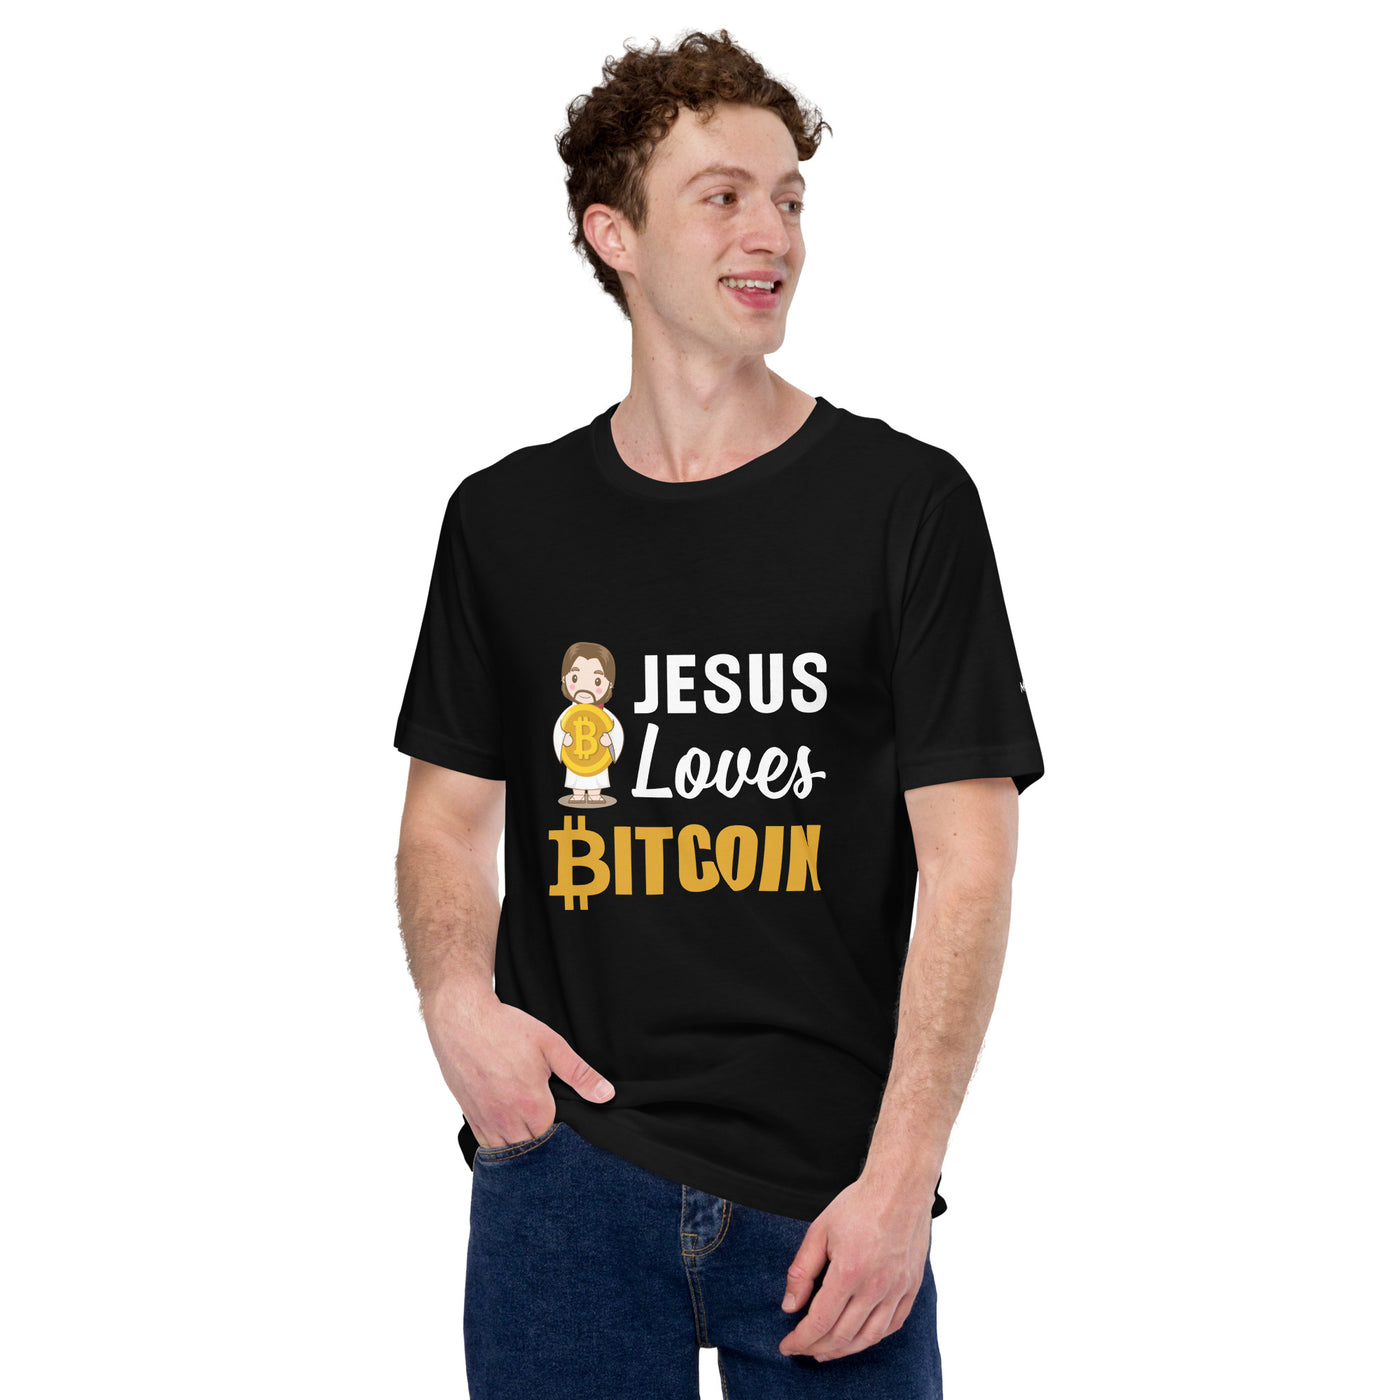 Jesus loves Bitcoin - Unisex t-shirt